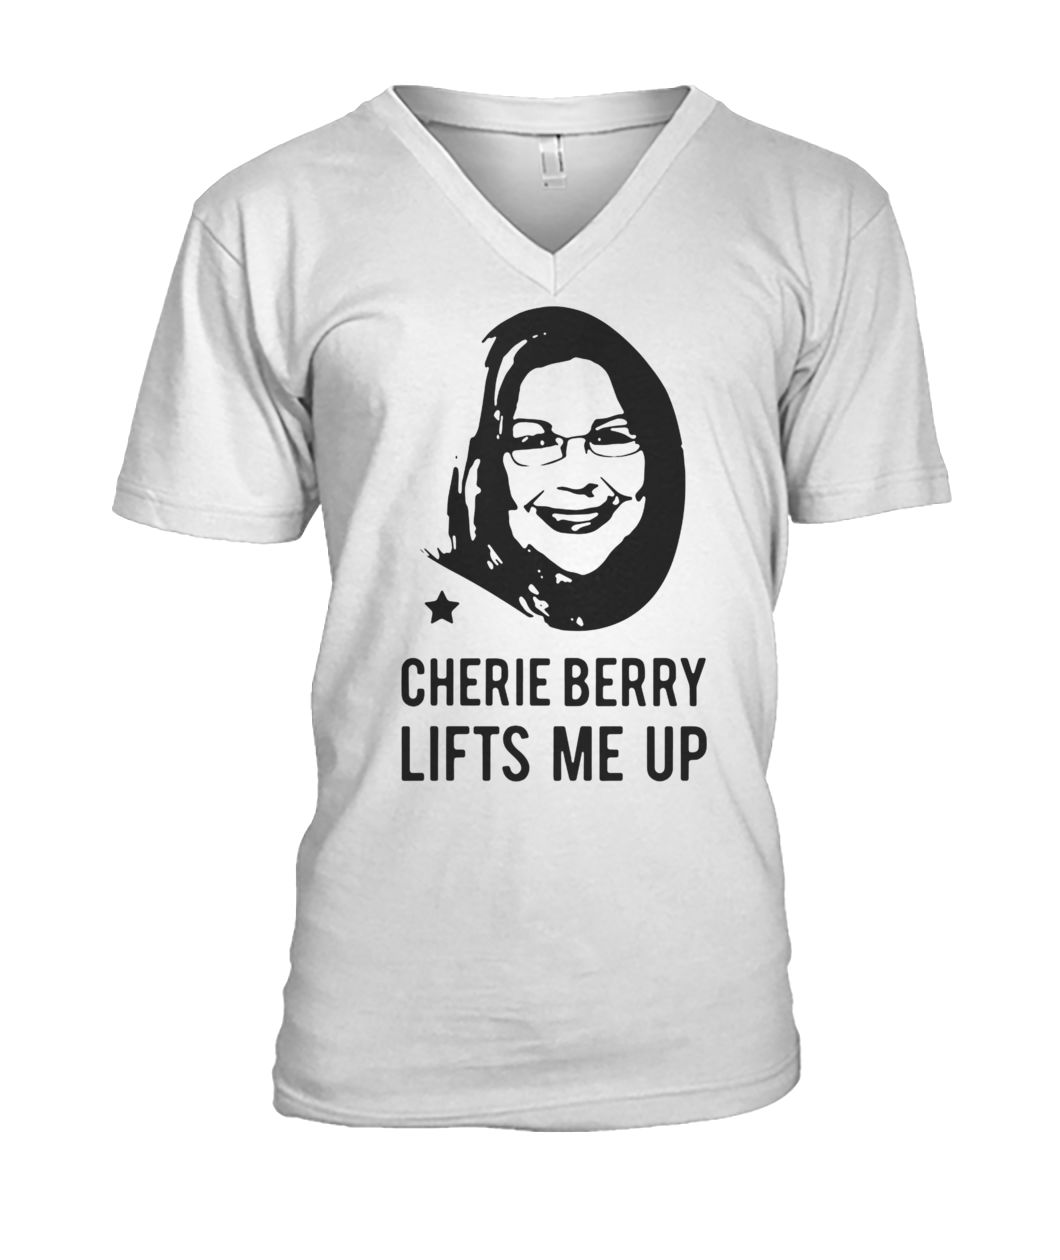 Cherie berry lifts me up mens v-neck